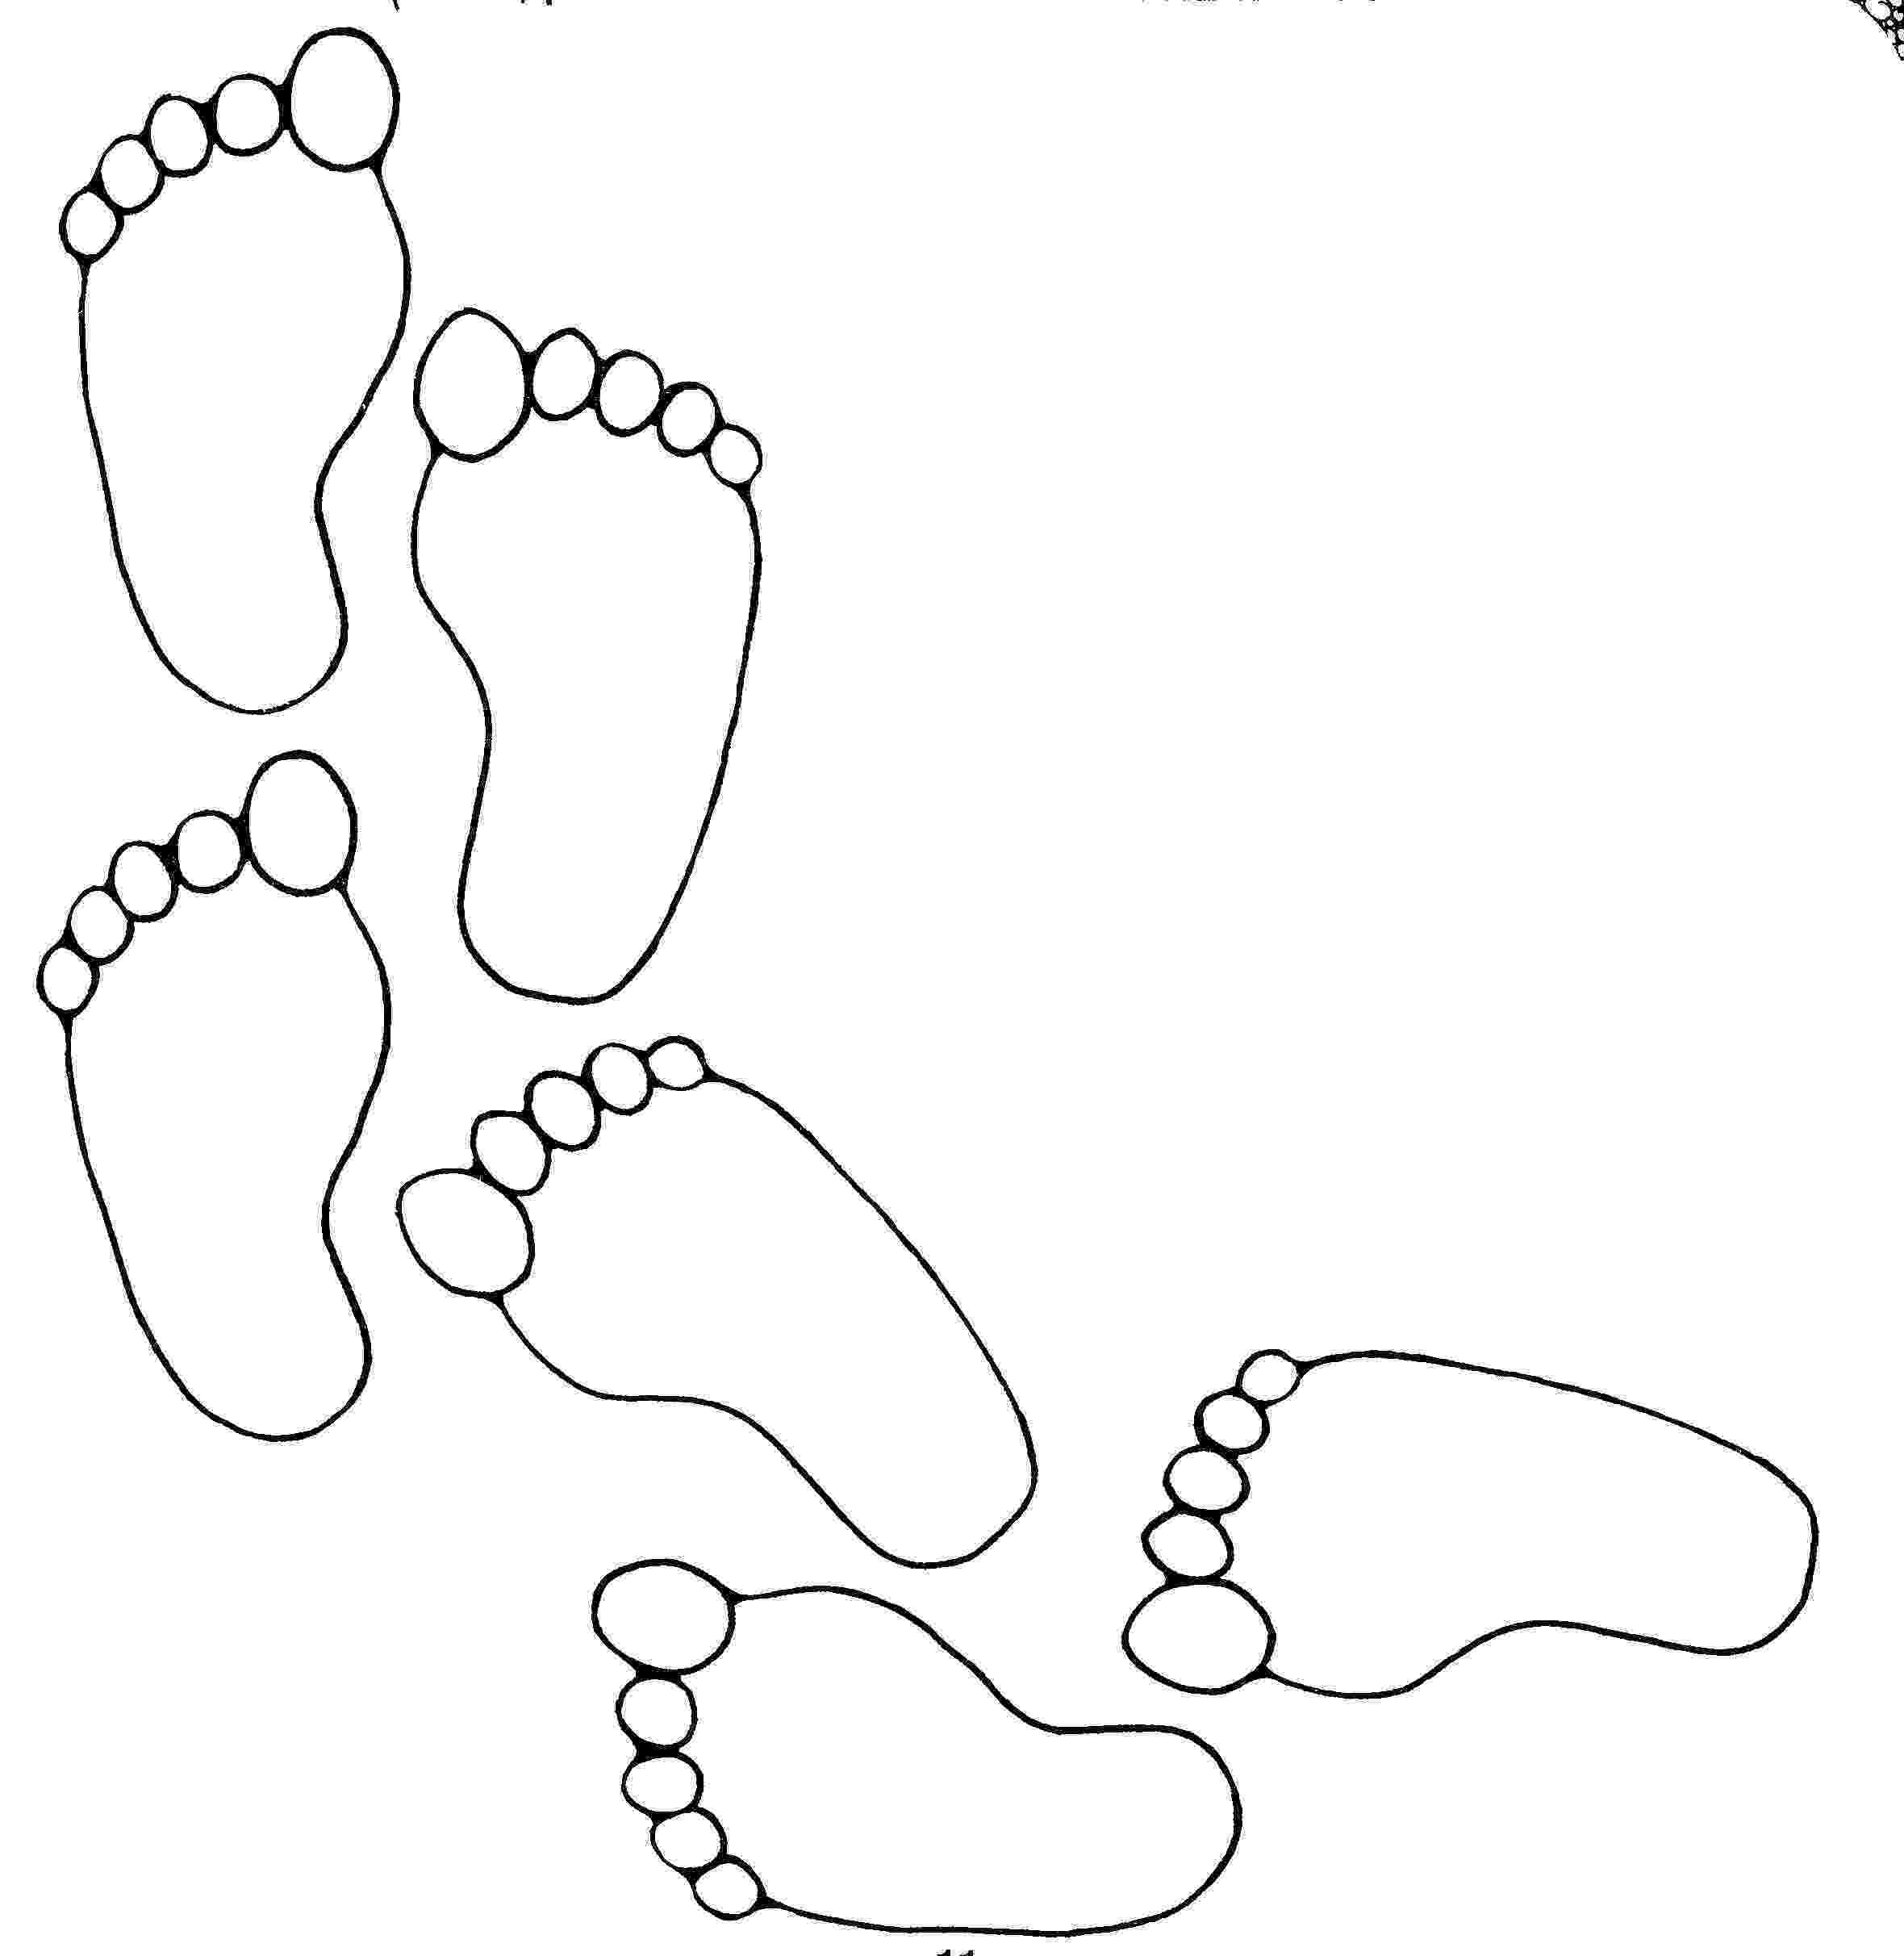 feet coloring sheet activity sheets mark a chambers illustration sheet feet coloring 